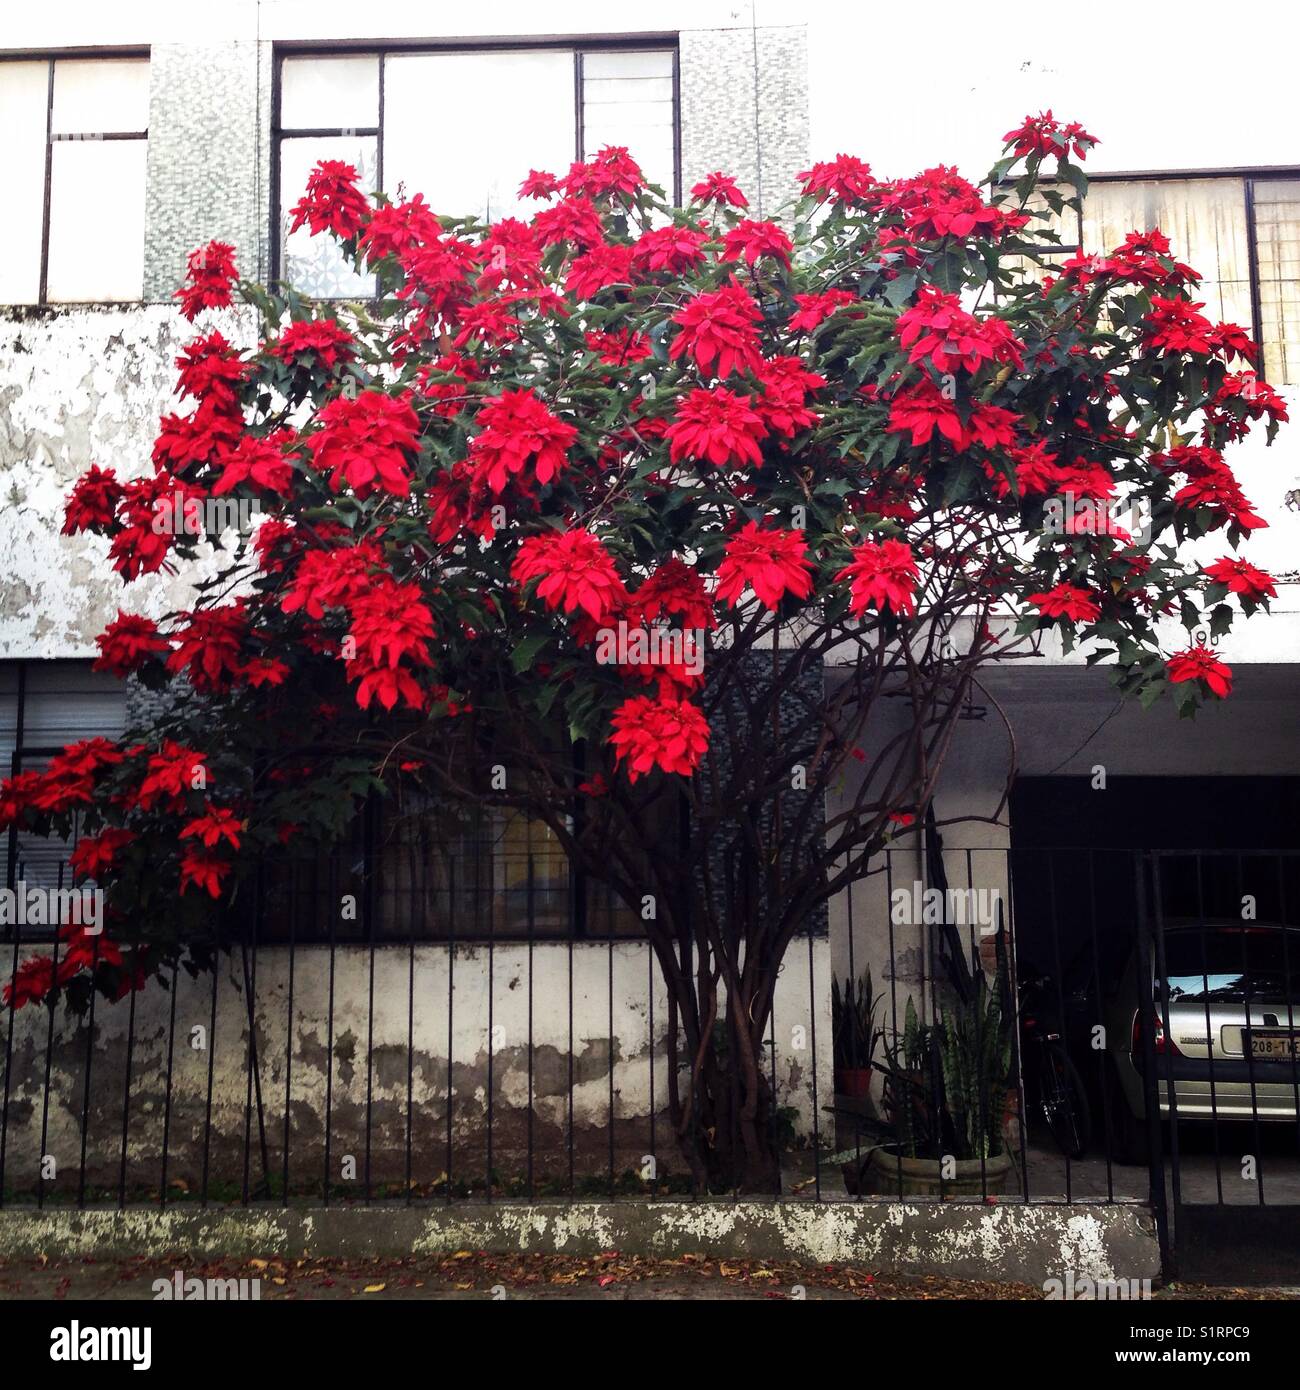 Poinsettia Tree Mexico | vlr.eng.br